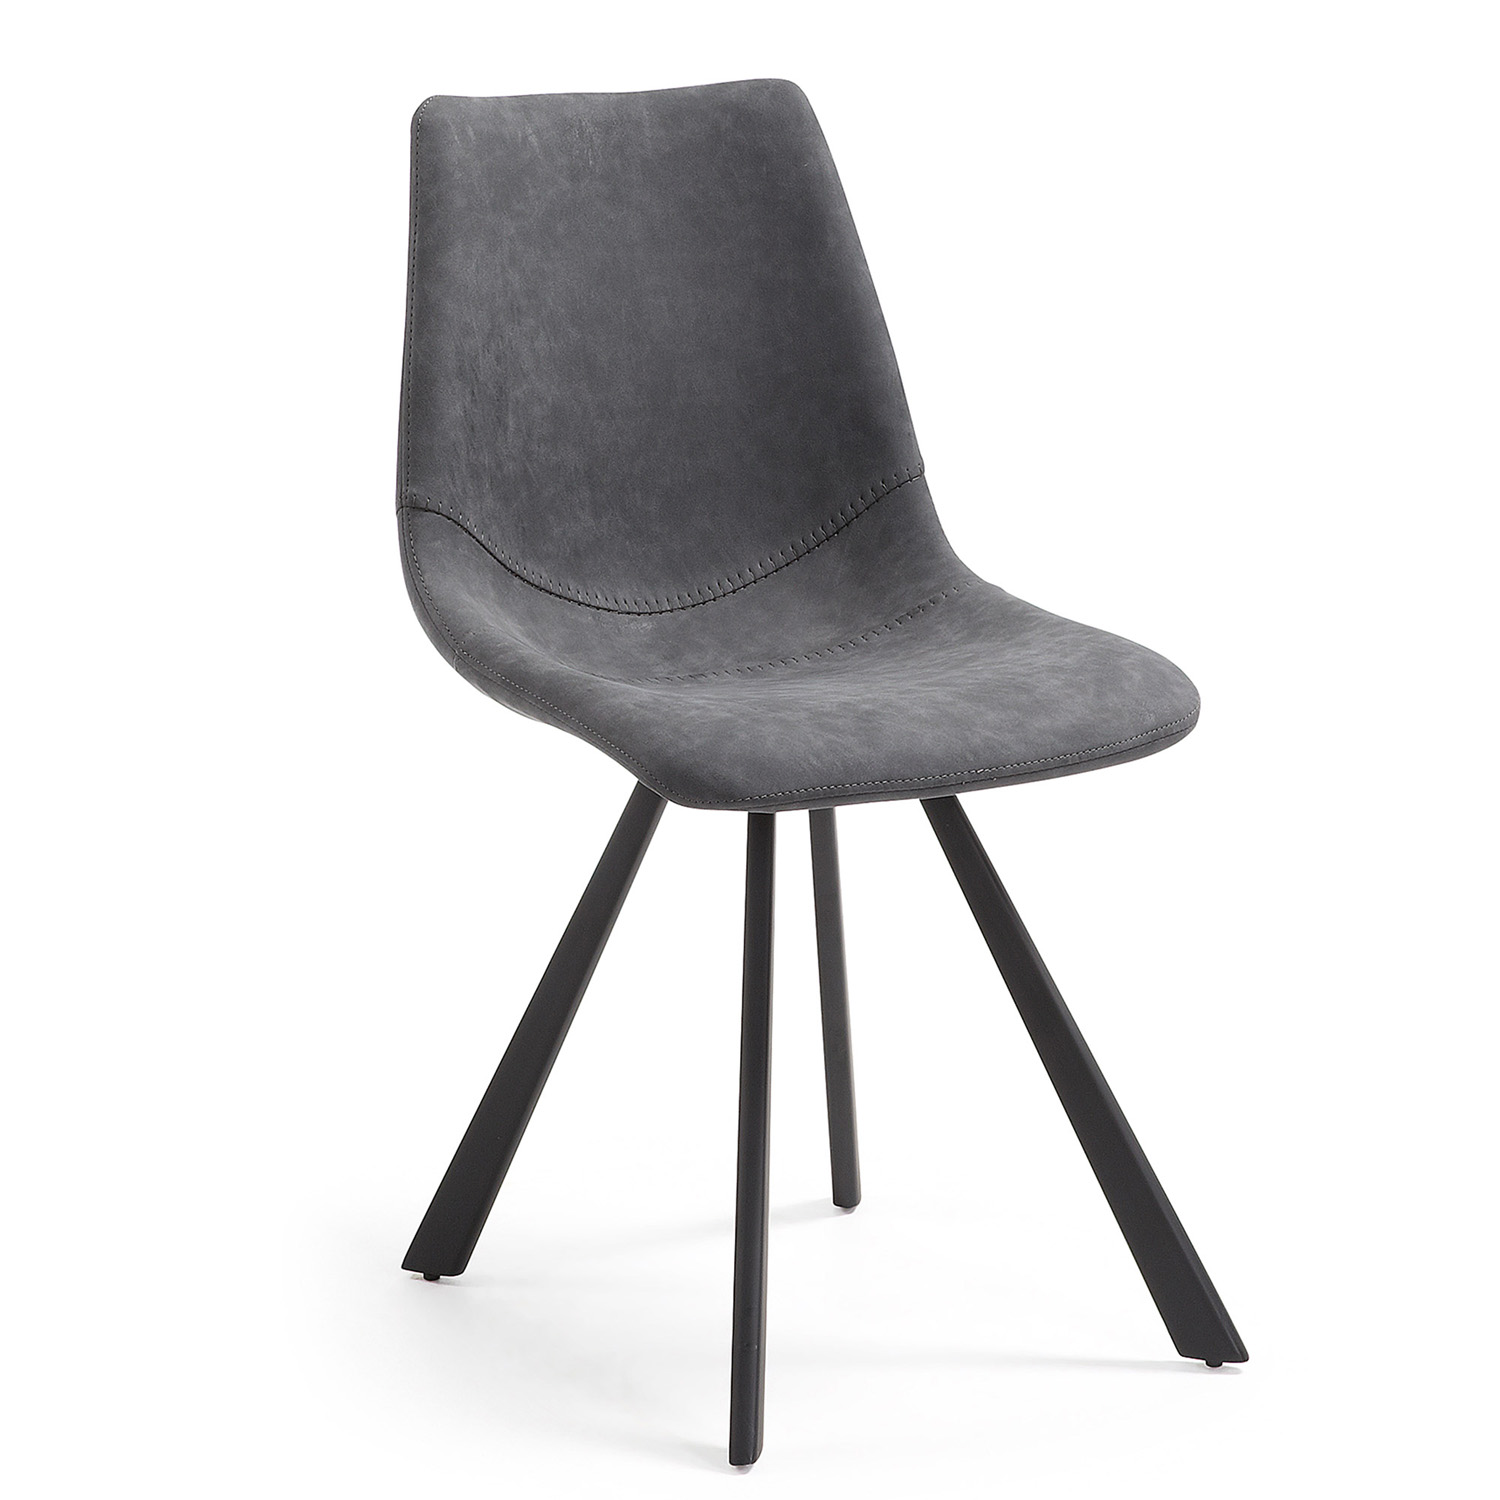 LAFORMA Andi spisebordsstol - grafitgrå PU og sort stål